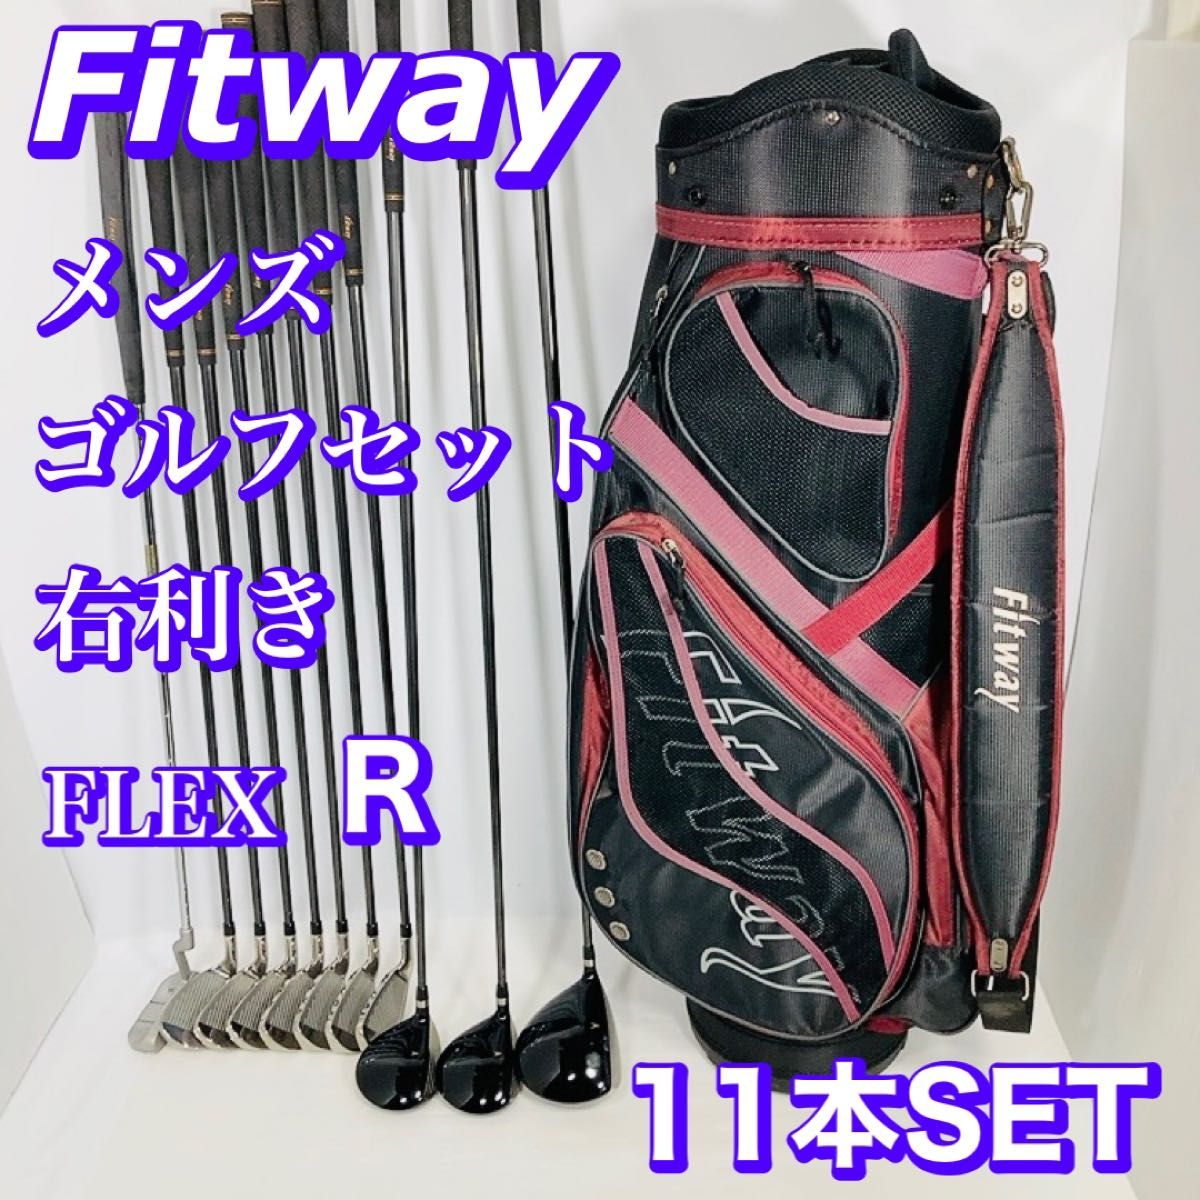 FITWAY ゴルフクラブ 11本 フルセット 右利き FLEX R Fitway フィット